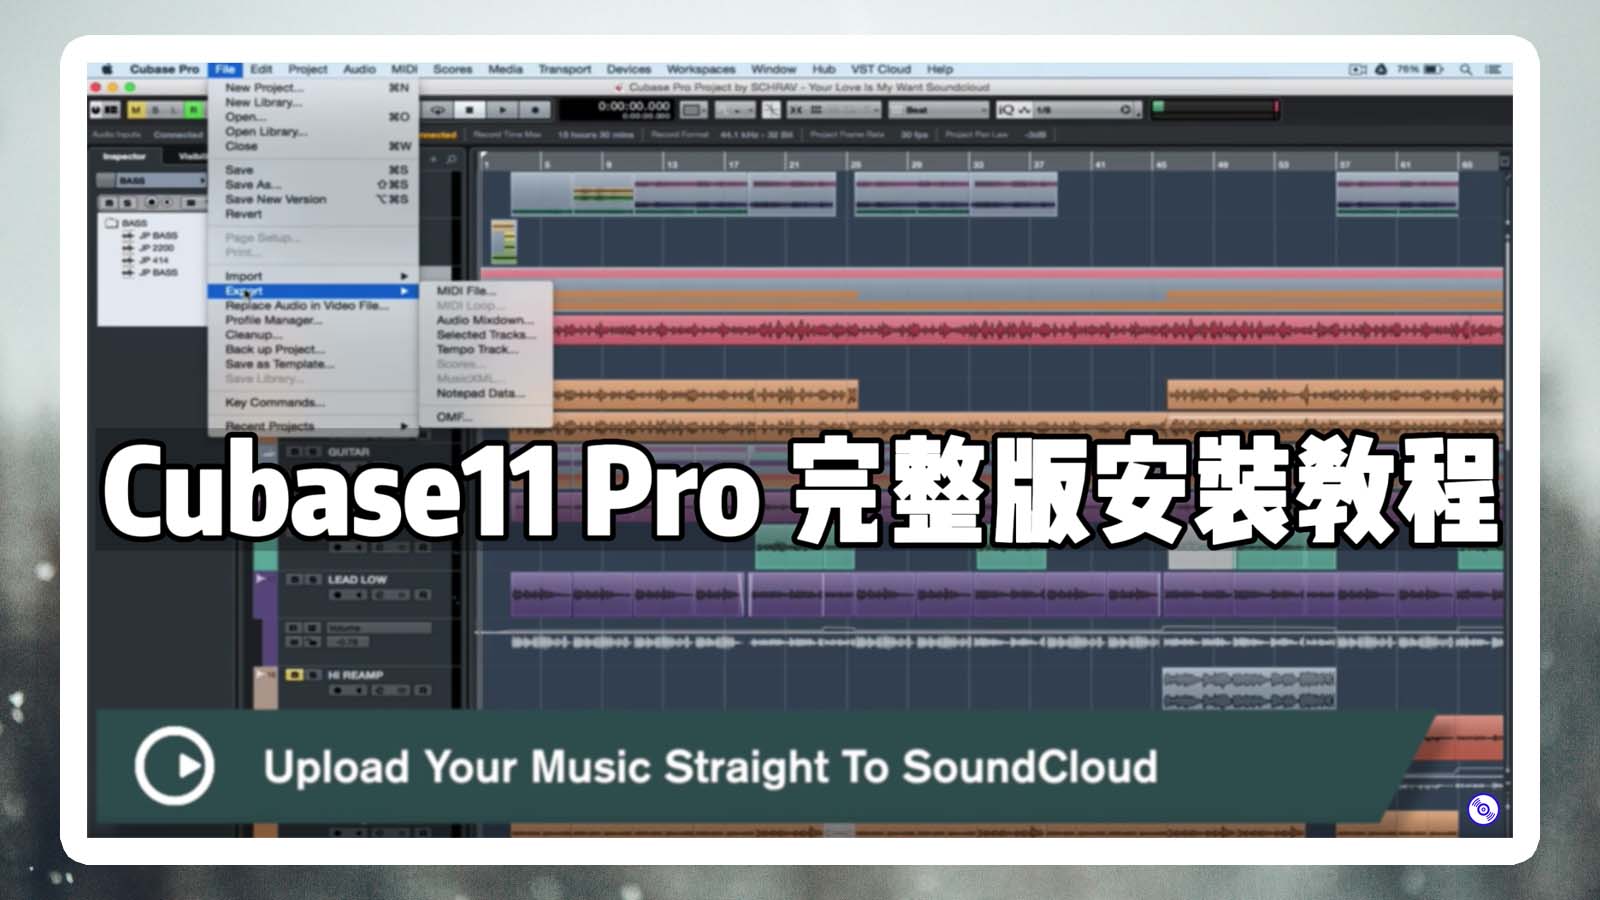 Cubase11 Pro 完整版 Windows 包含音色库插件  音乐制作编曲混音软件 Cubase11 Pro版